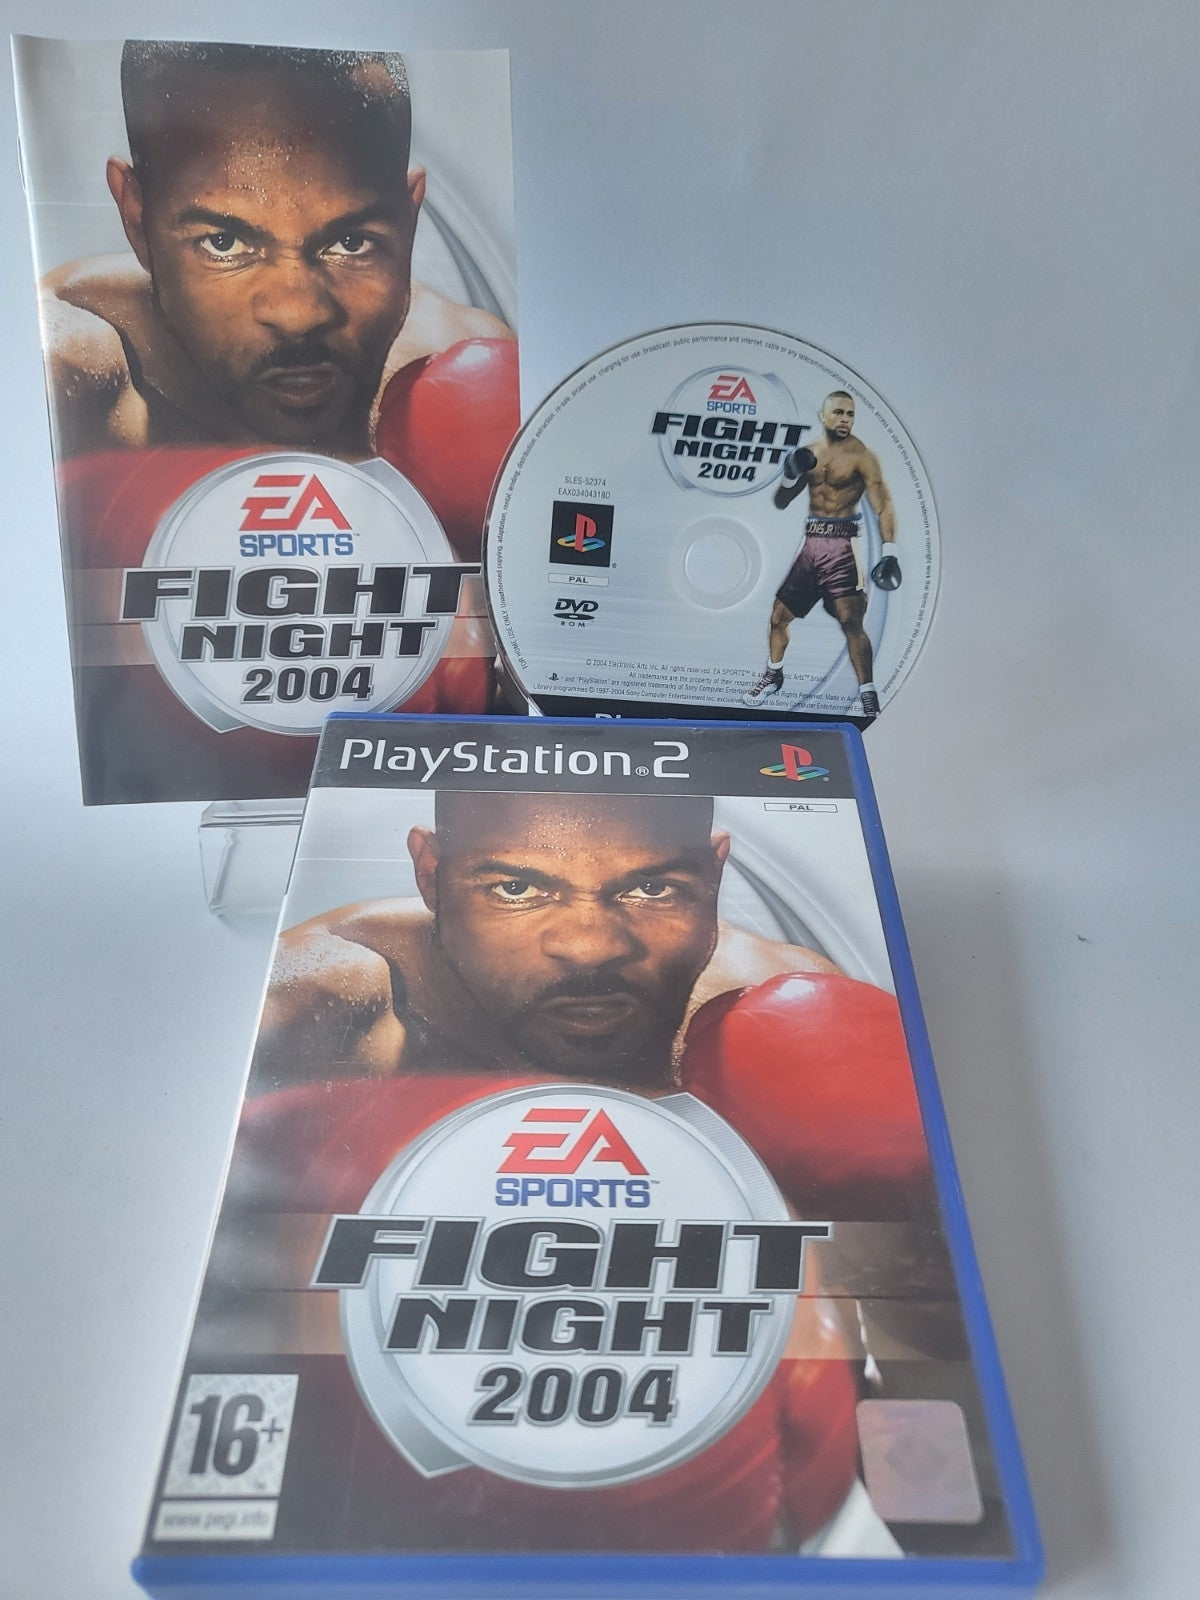 EA Sports Fight Night 2004 Playstation 2